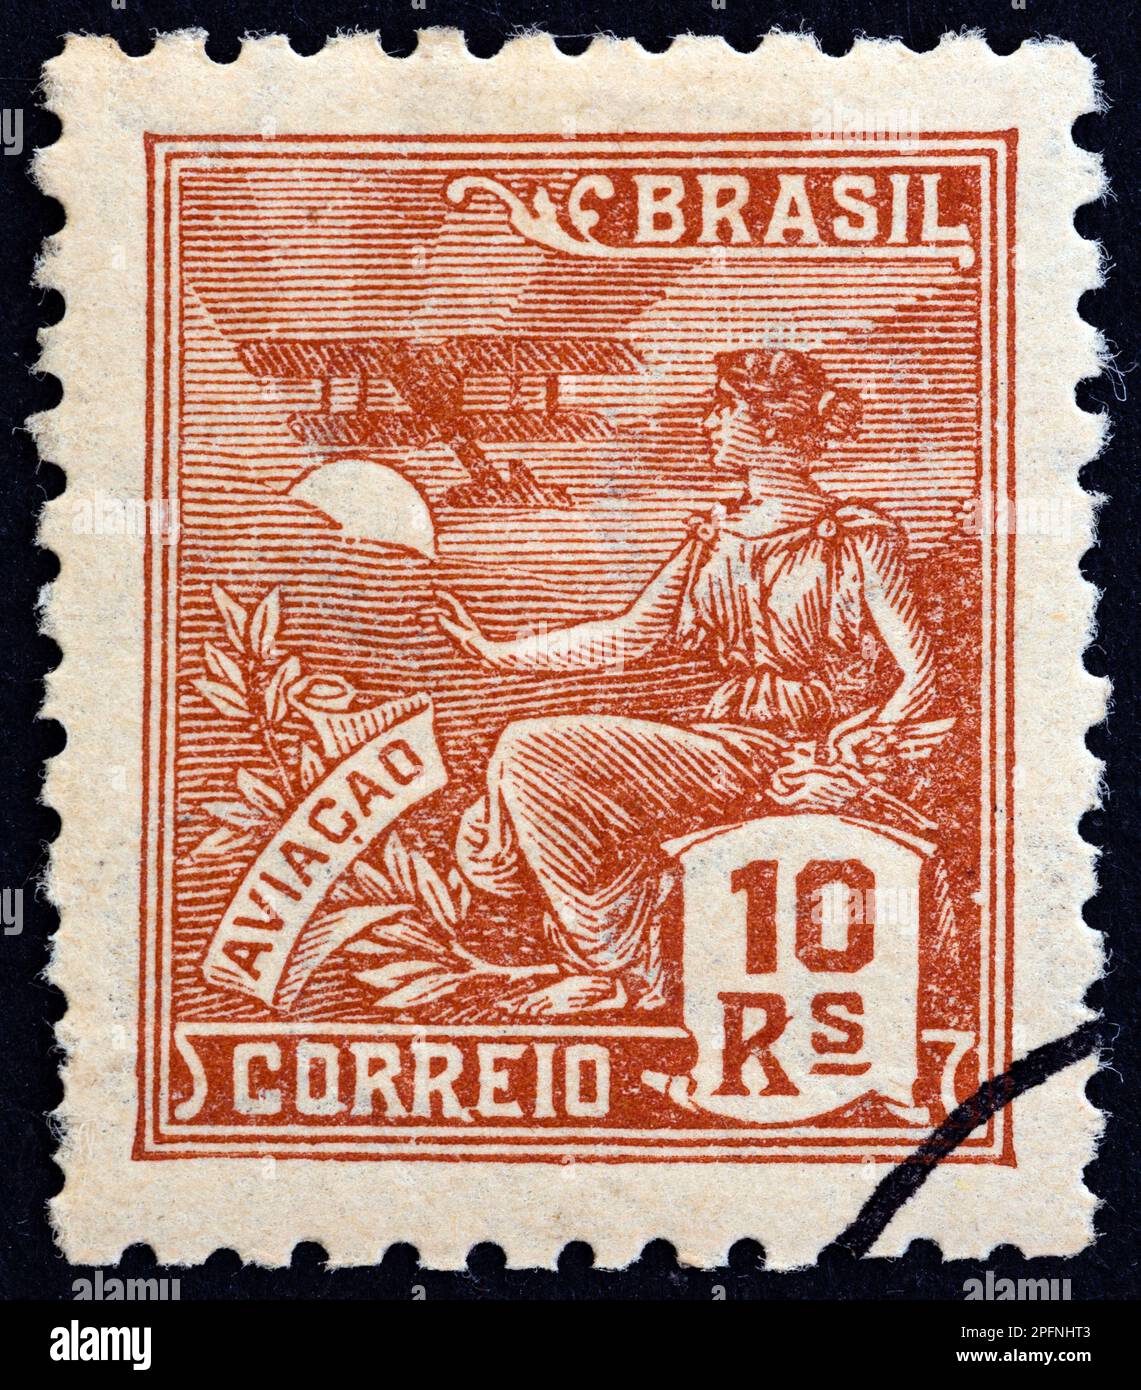 BRAZIL - CIRCA 1940: A stamp printed in Brazil shows Aviation, circa 1940. Stock Photo